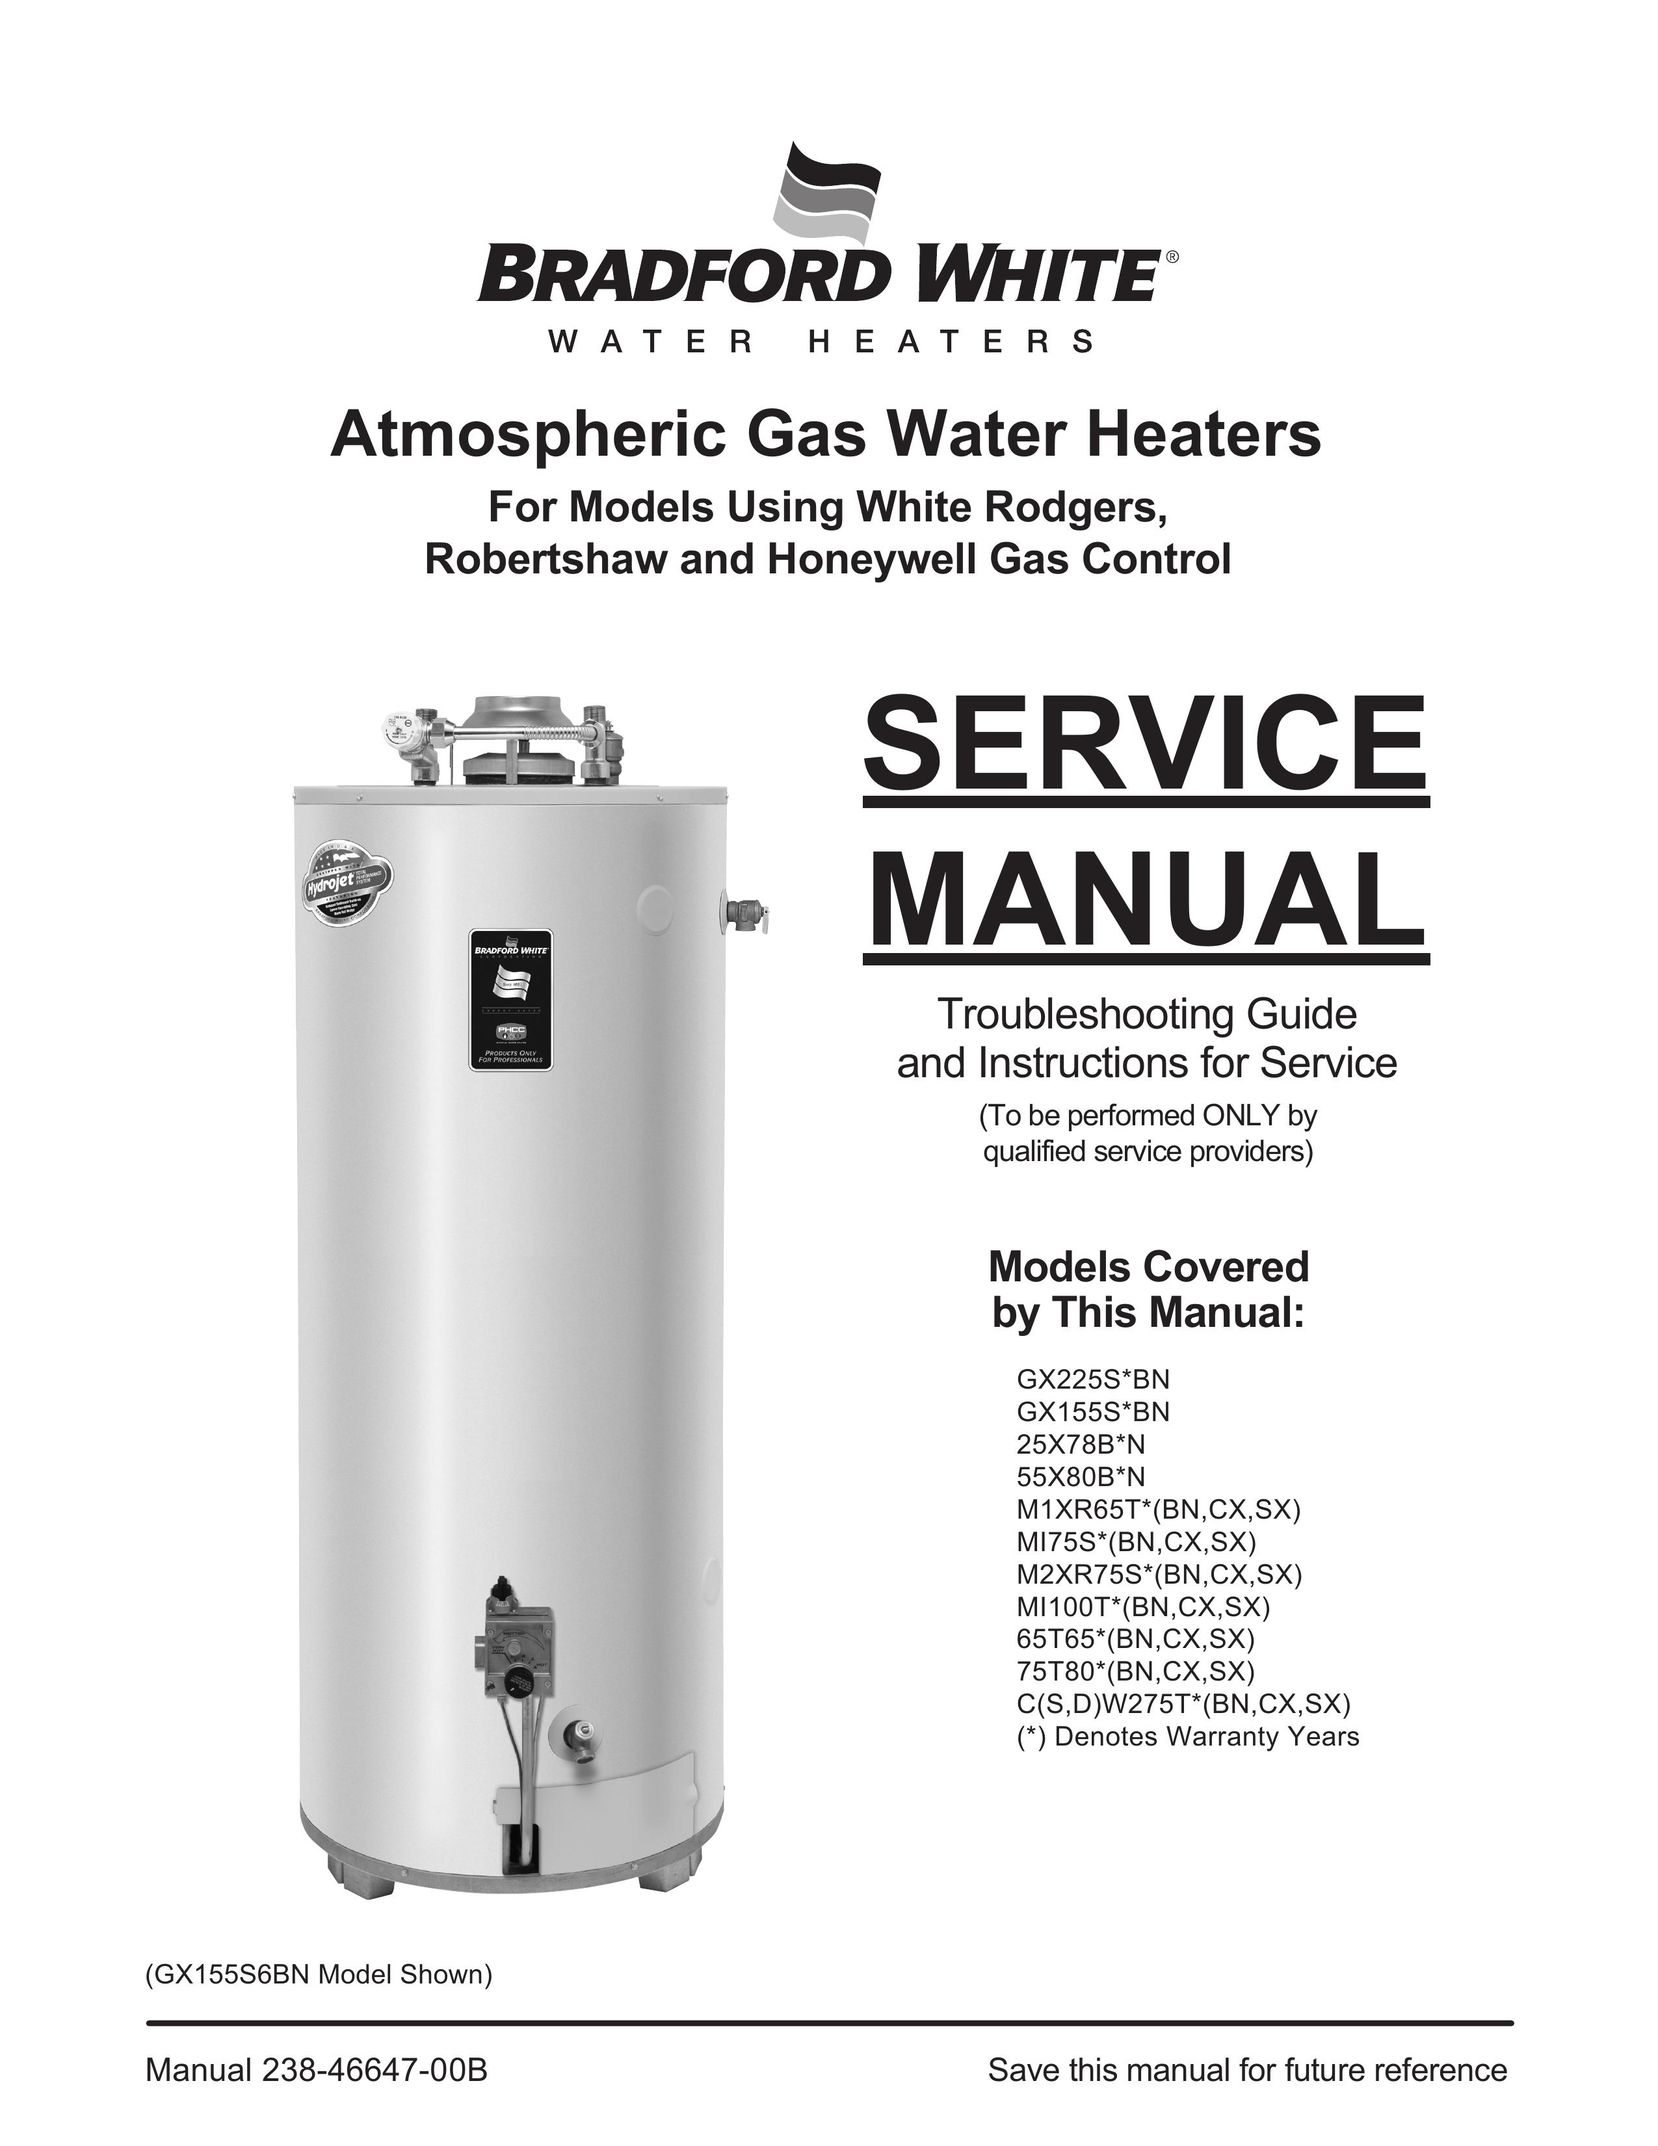 Bradford-White Corp 65T65*(BN Water Heater User Manual